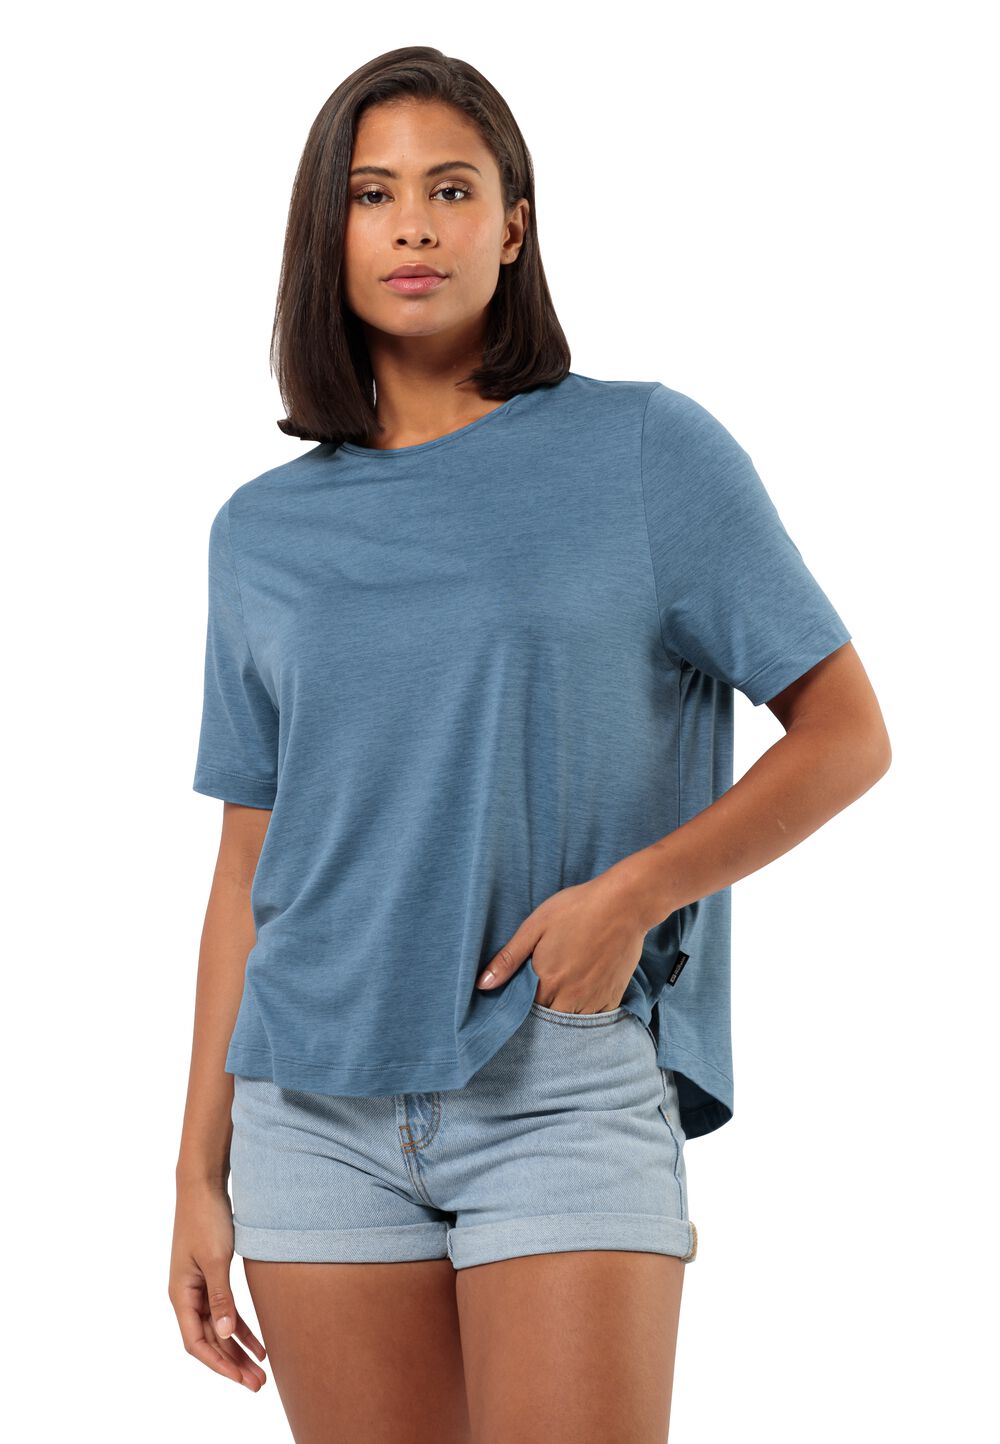 Jack Wolfskin Travel T-Shirt Women Functioneel shirt Dames L elemental blue elemental blue